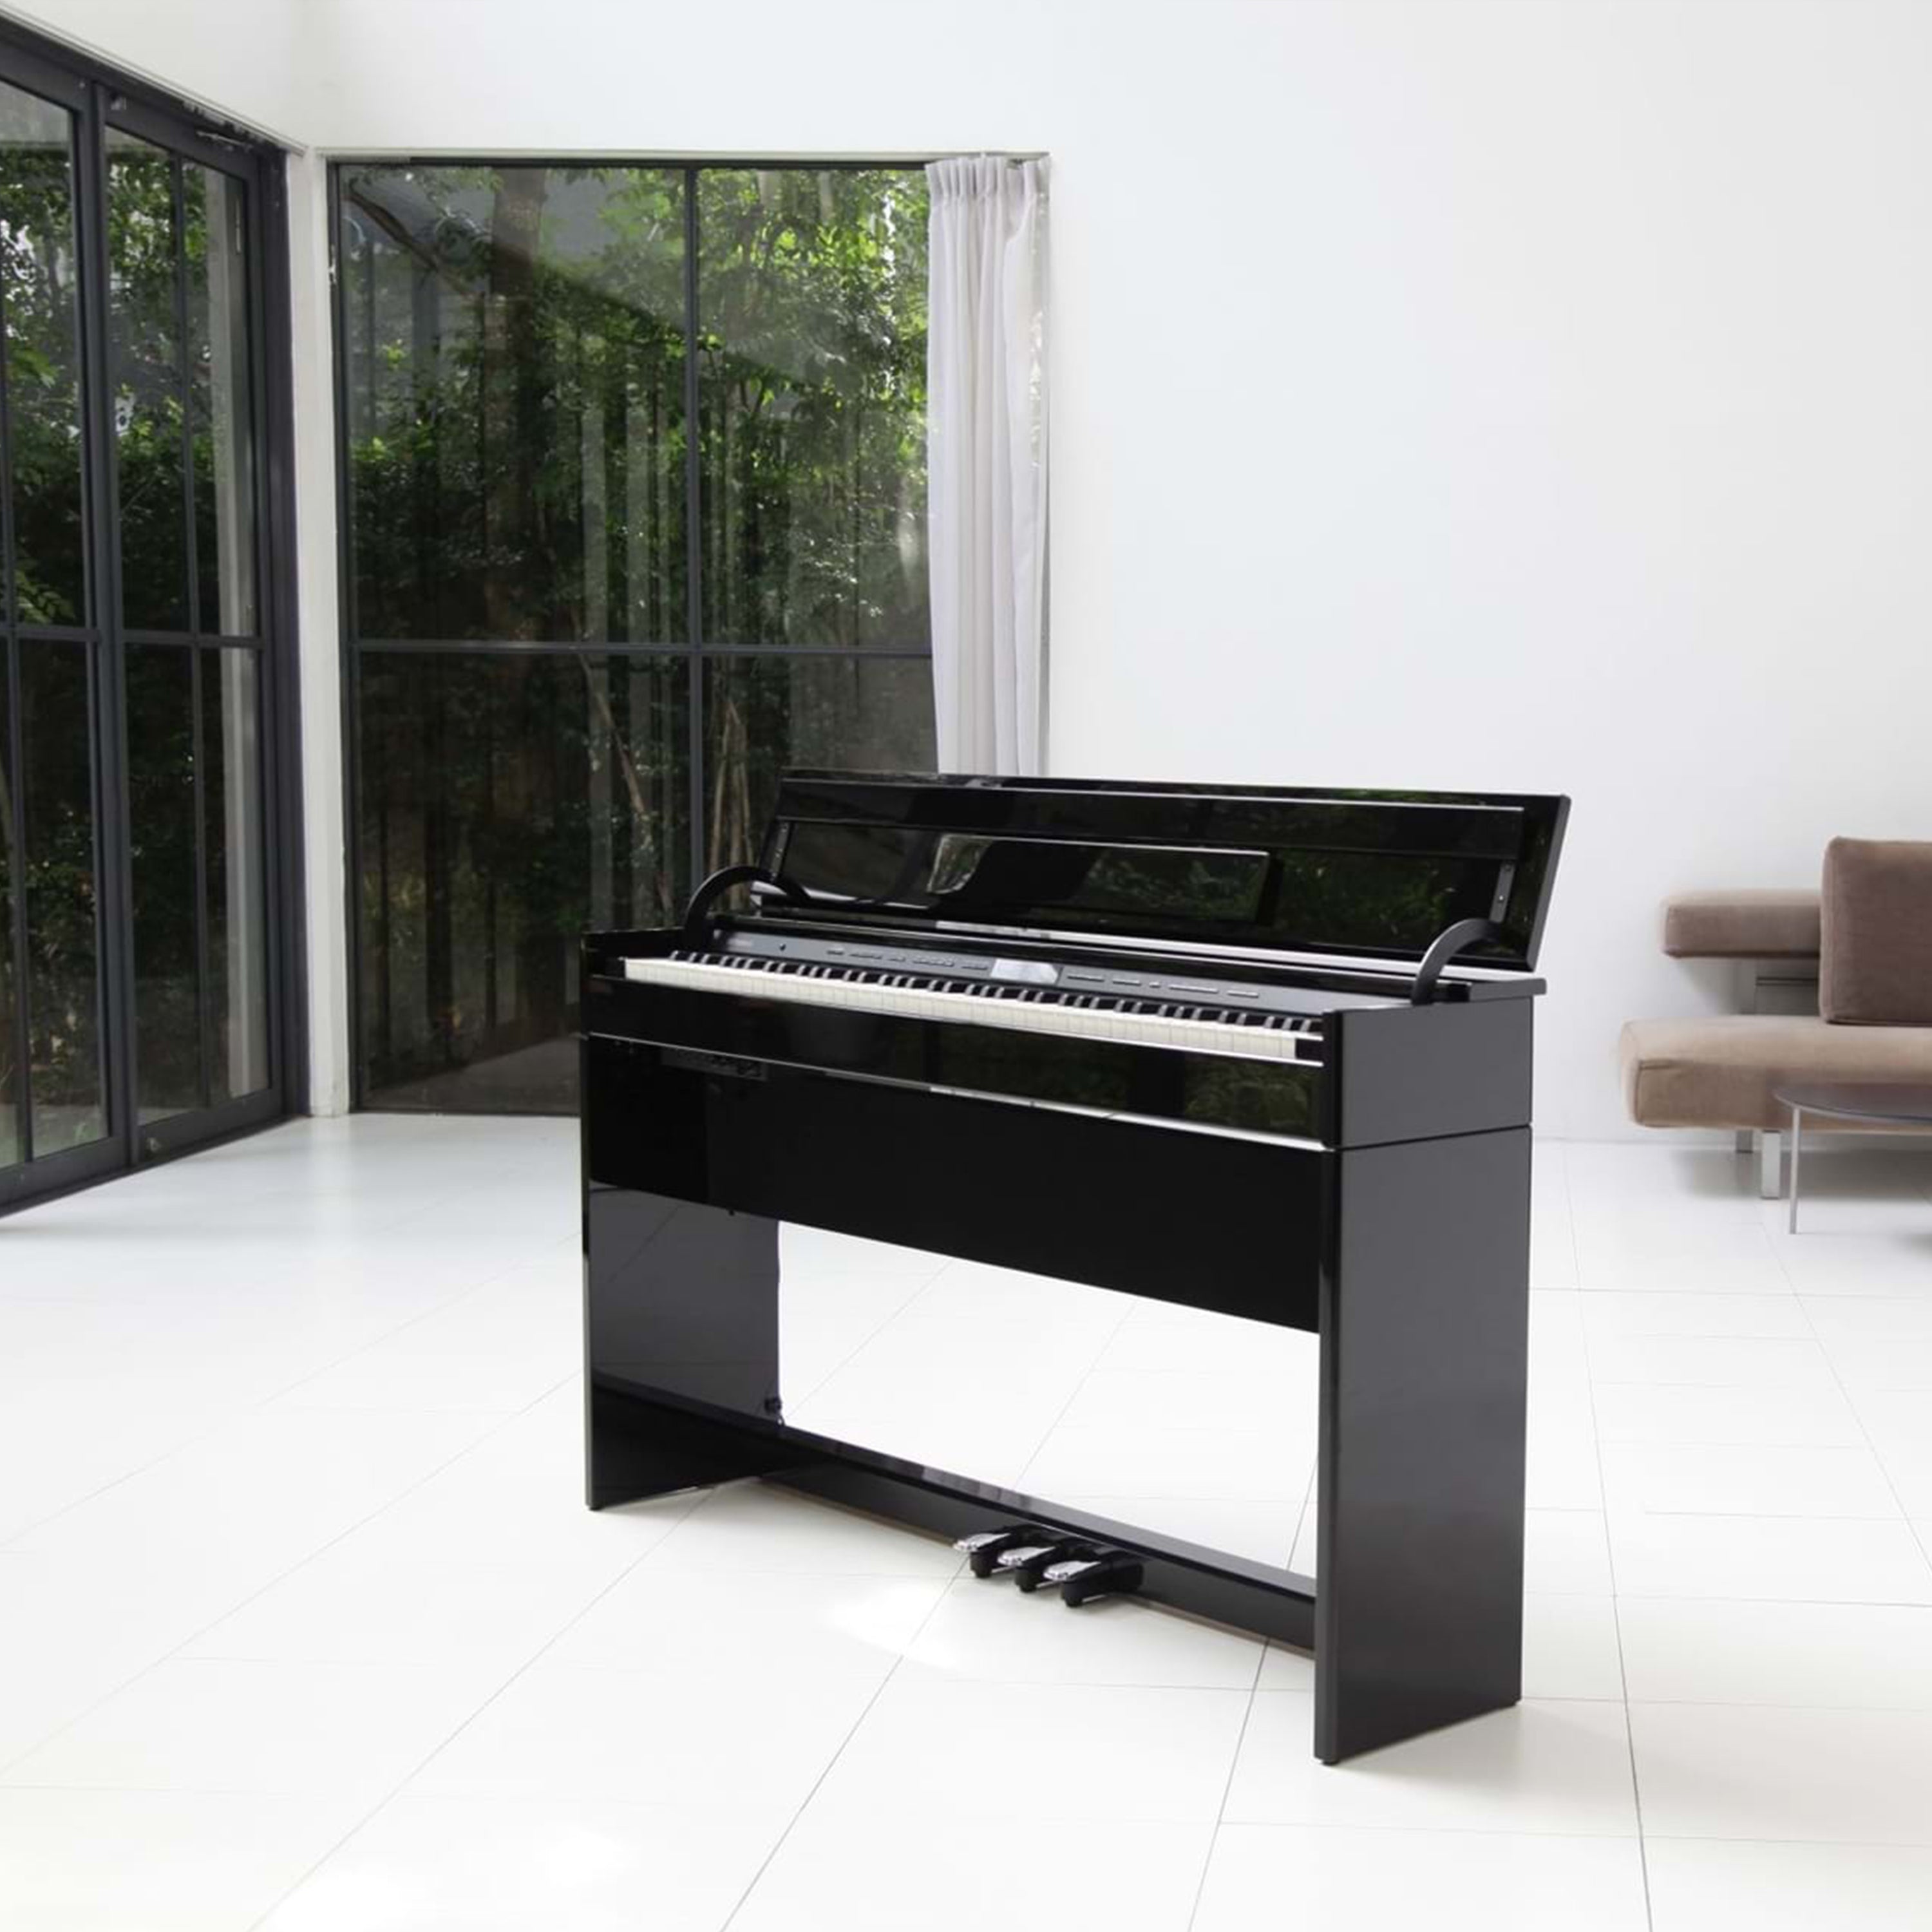 Yamaha p45 digital piano + gear - Musical Instruments - Sparks, Nevada, Facebook Marketplace